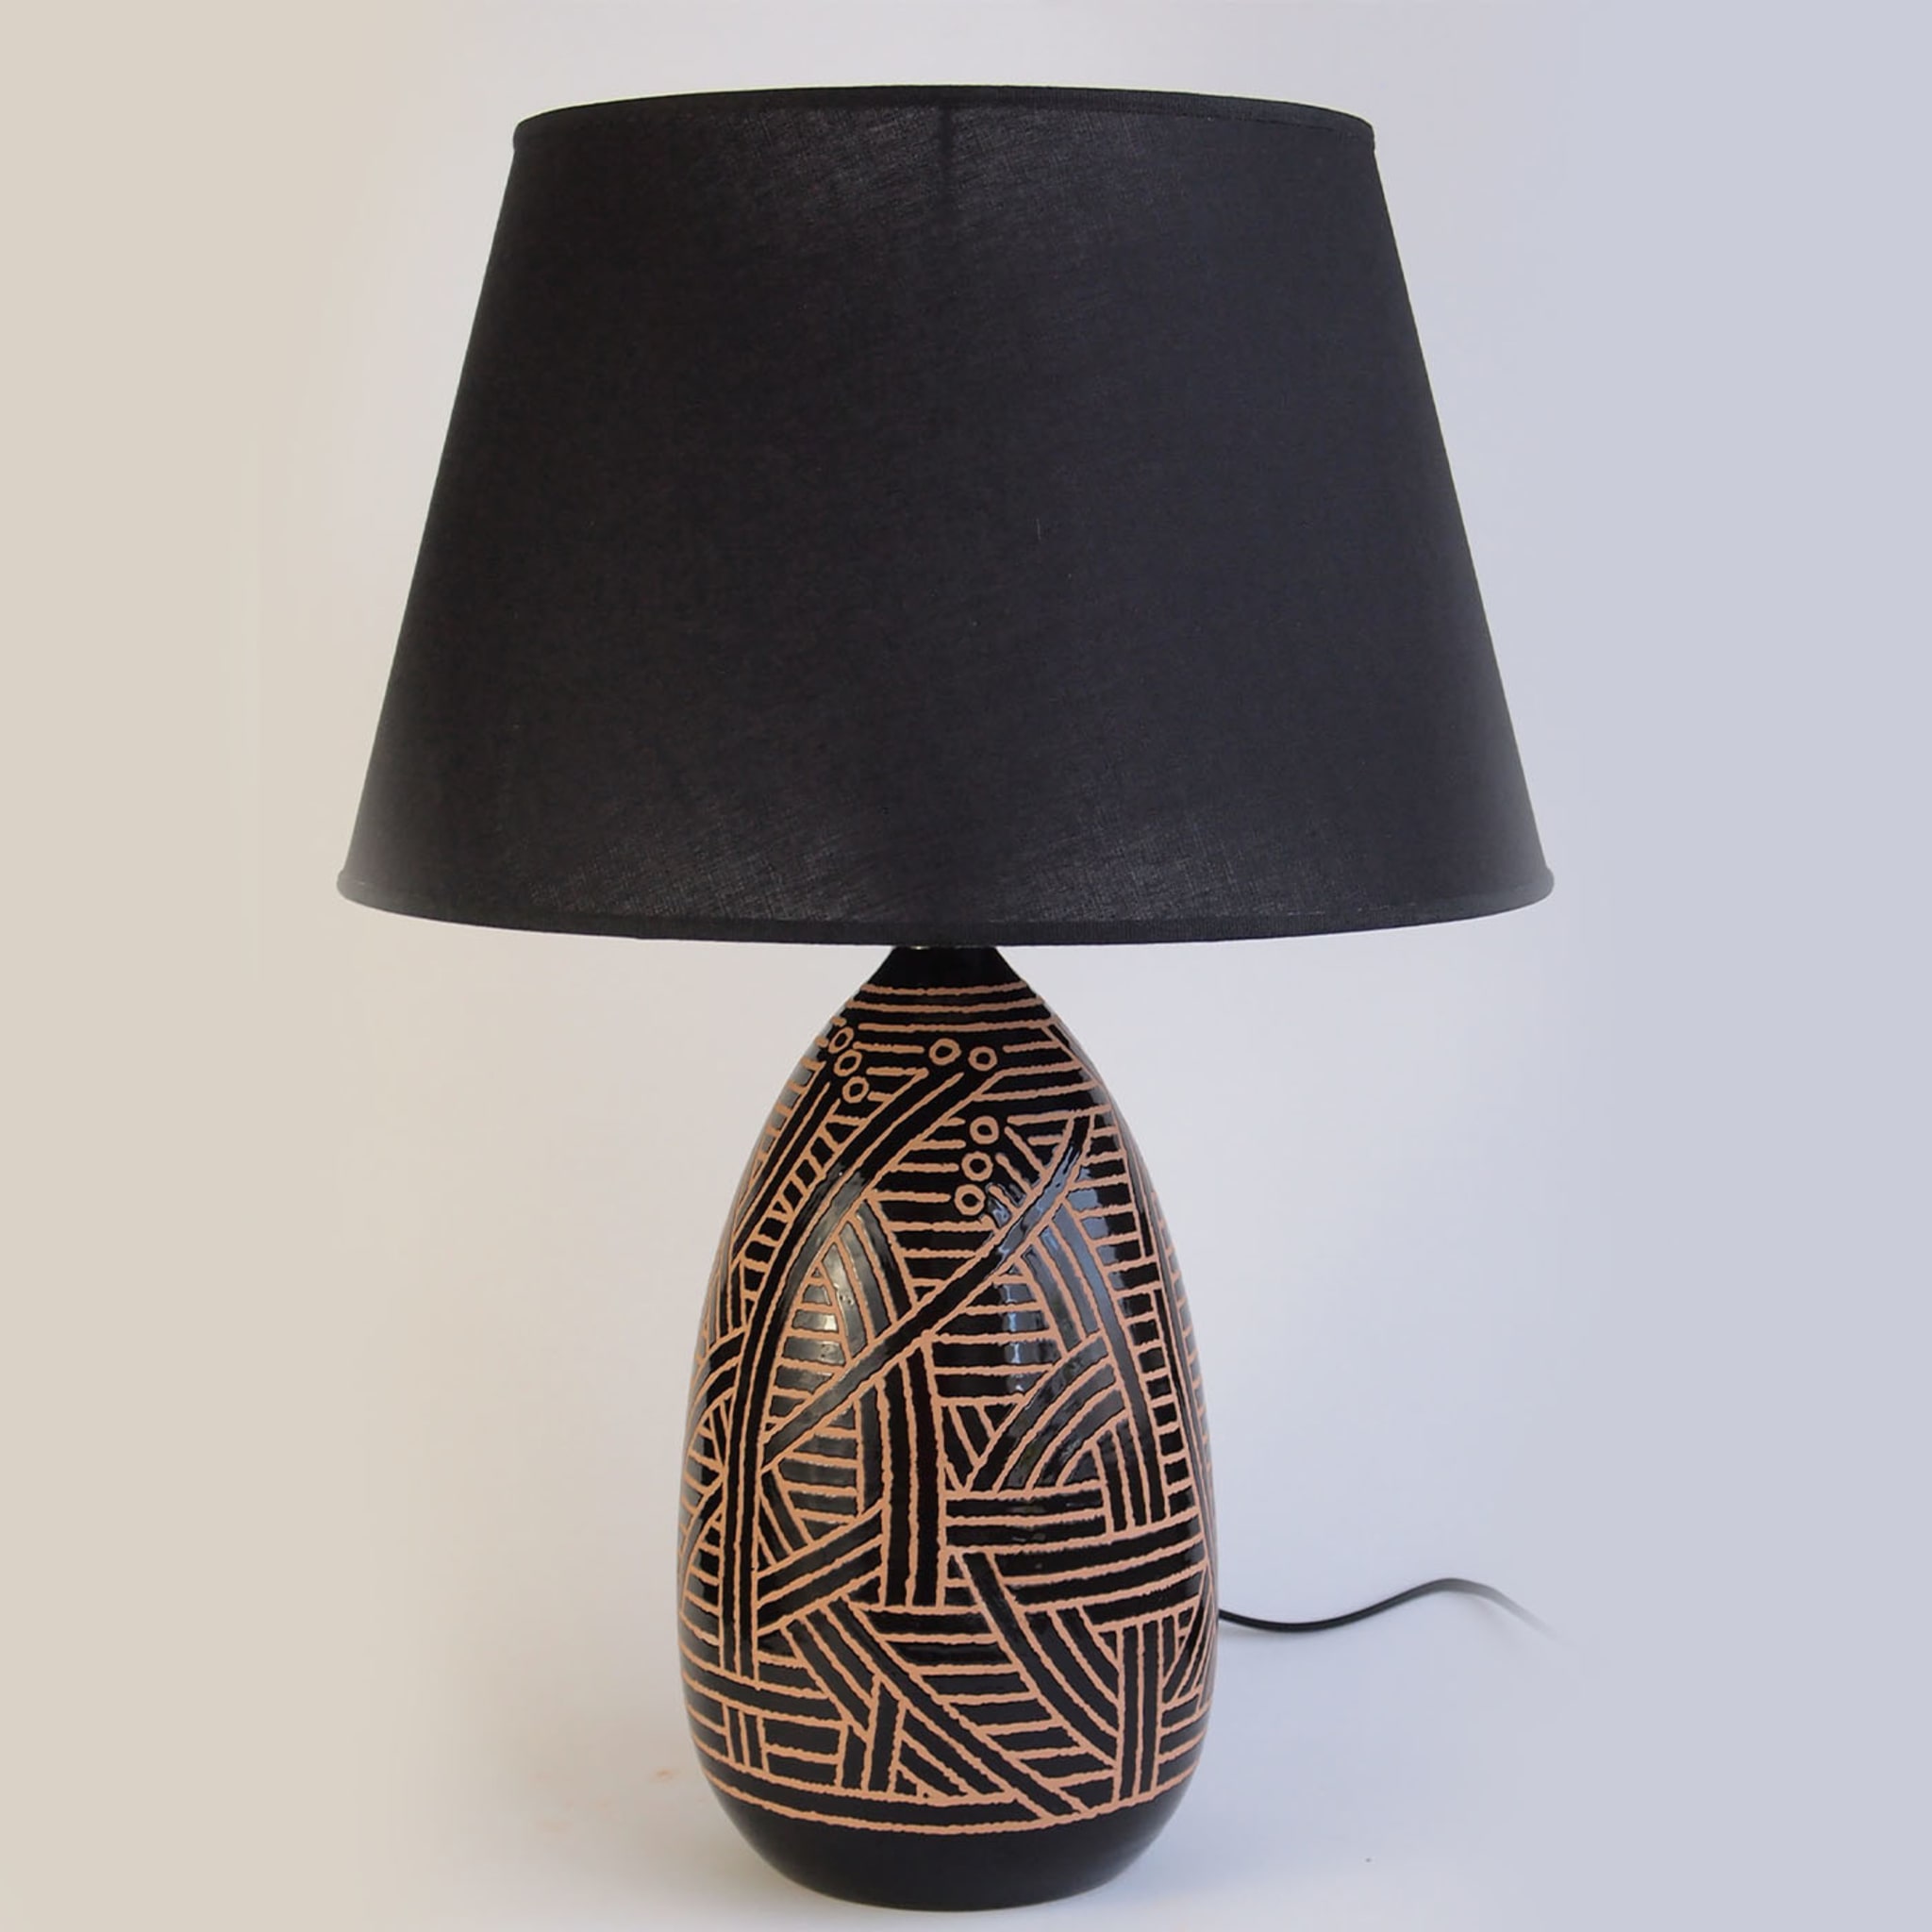 Patterned Black & Terracotta Table Lamp - Alternative view 2